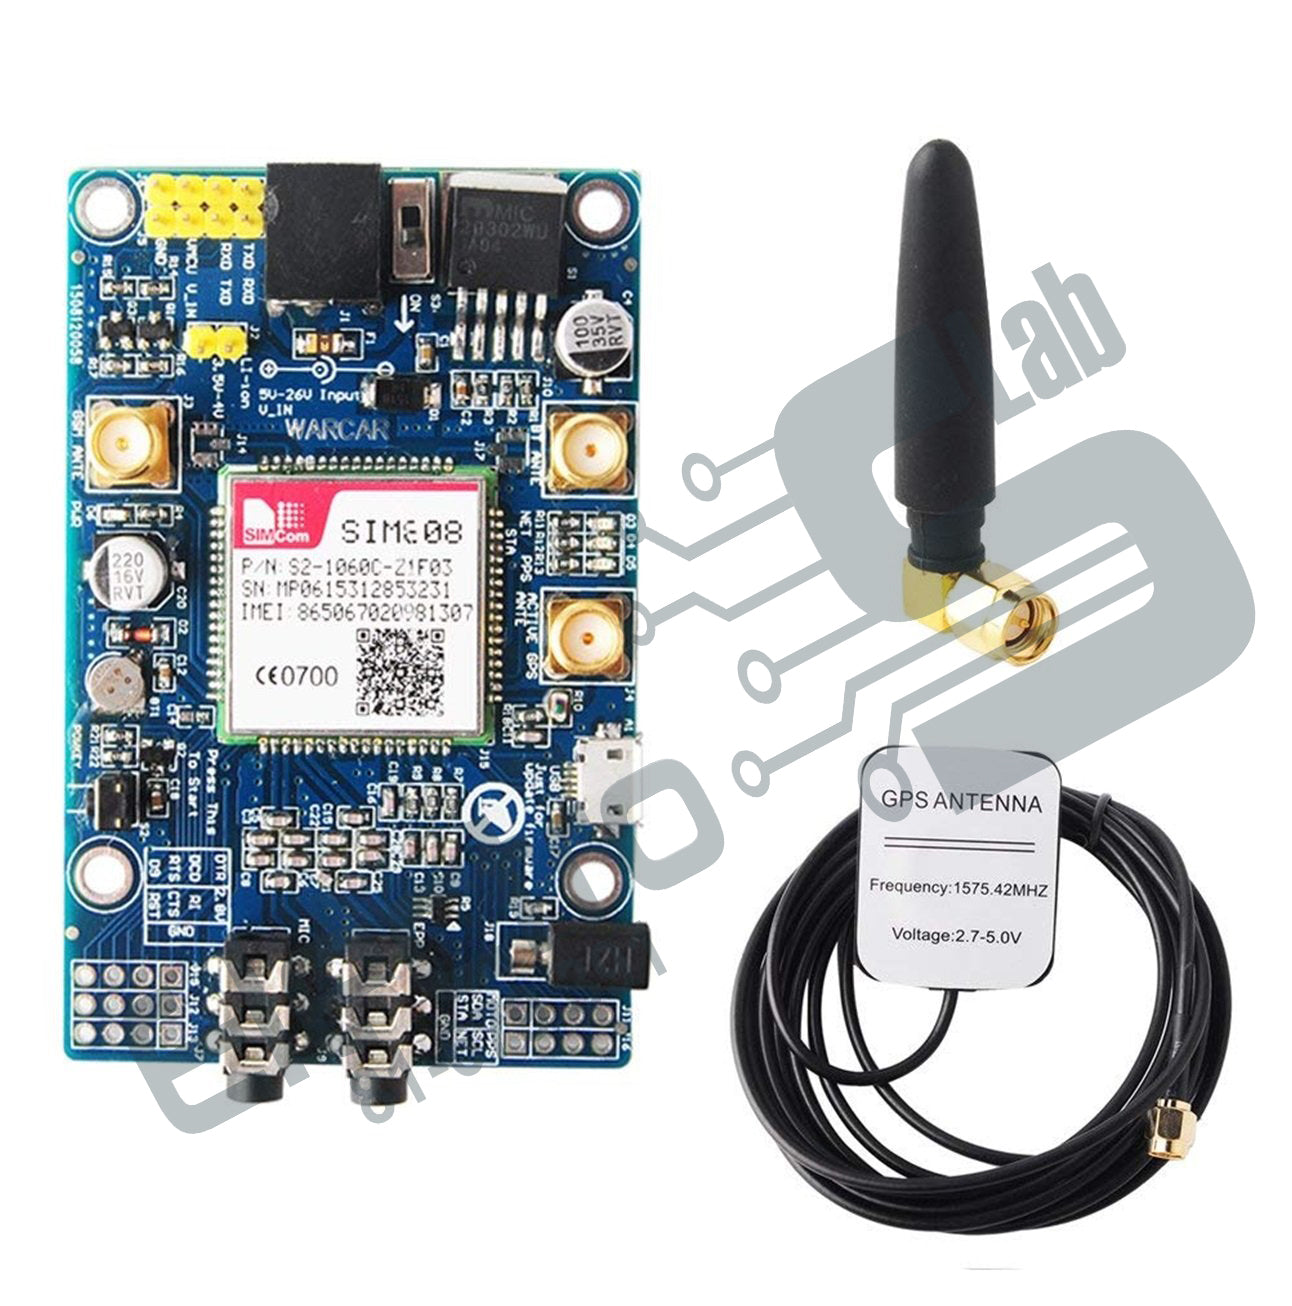 SIM808 SIM 808 Module Gsm GPRS GPS / 2G Sim Card